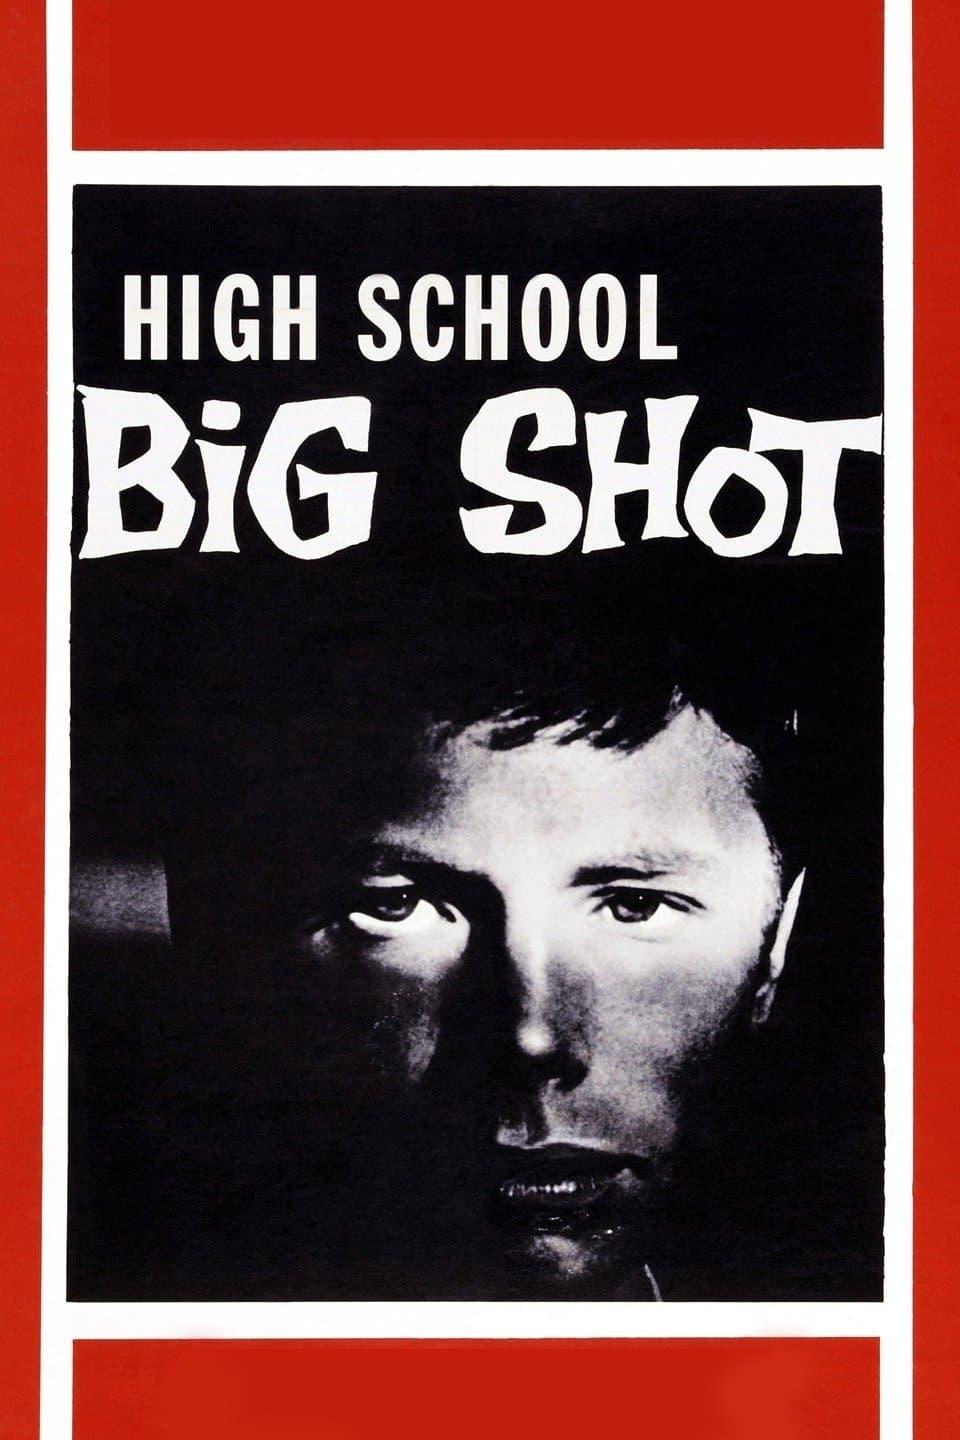 High School Big Shot poster